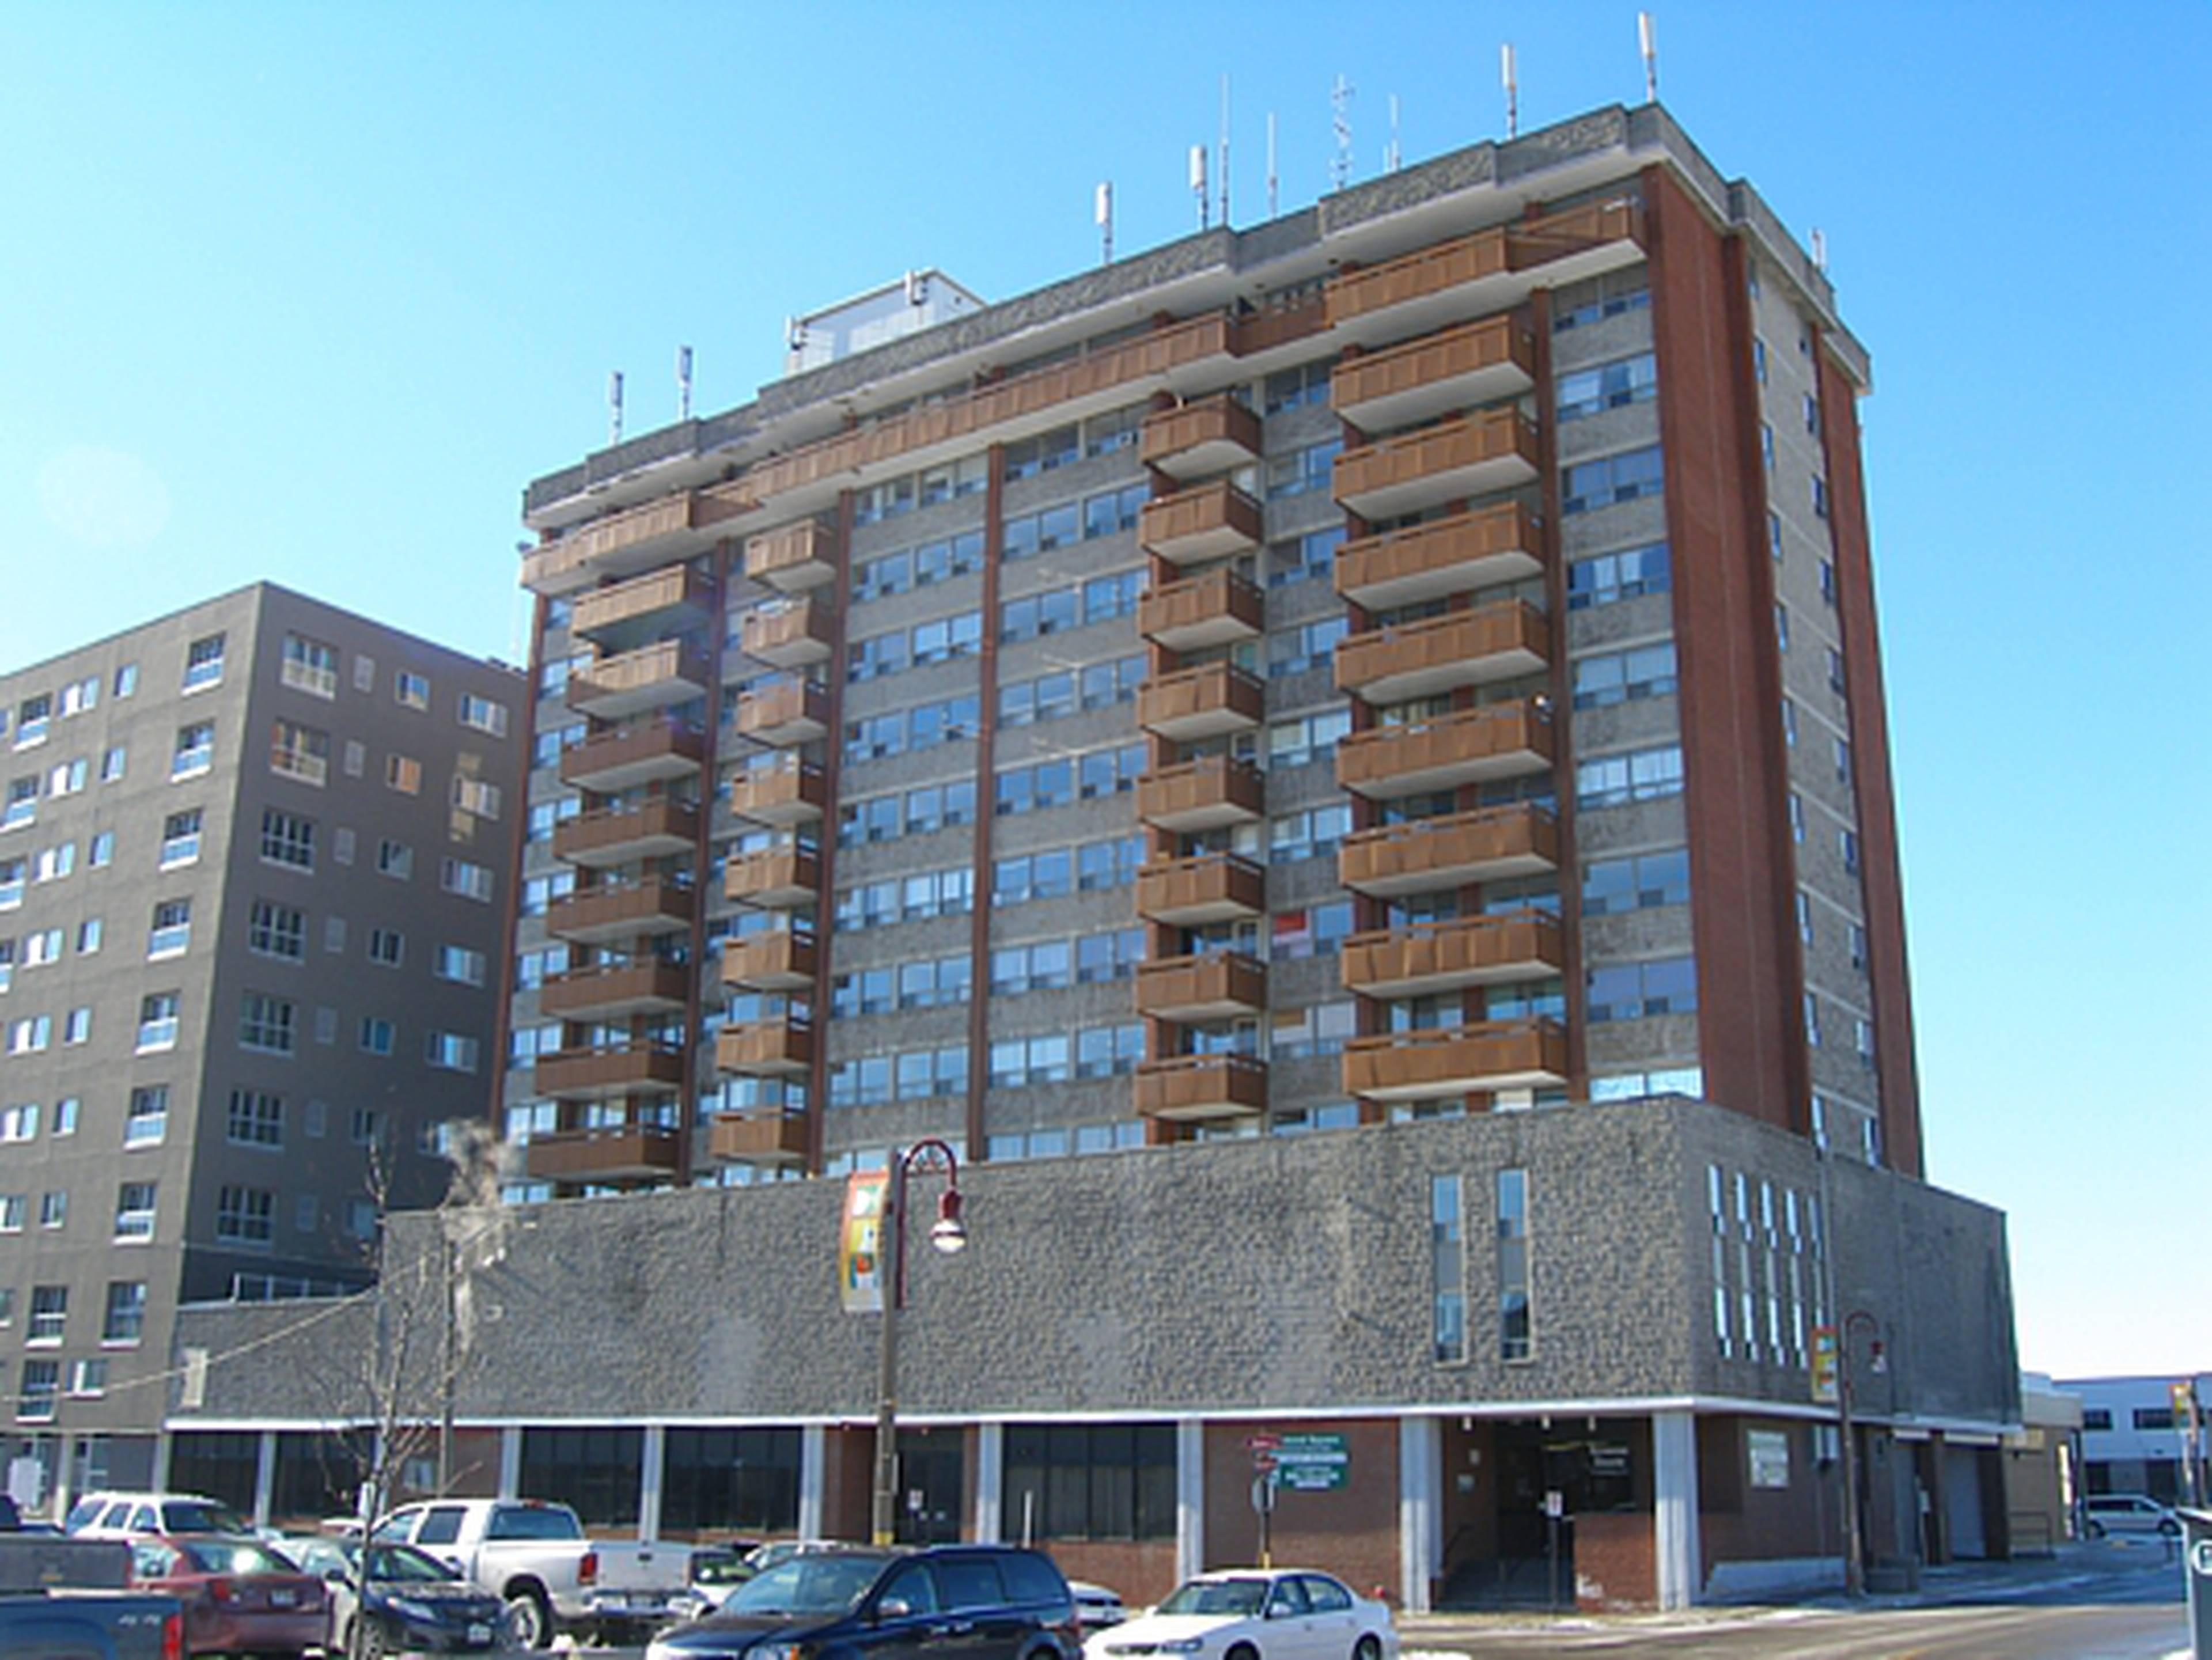 33 Richmond Street West Apartment Building